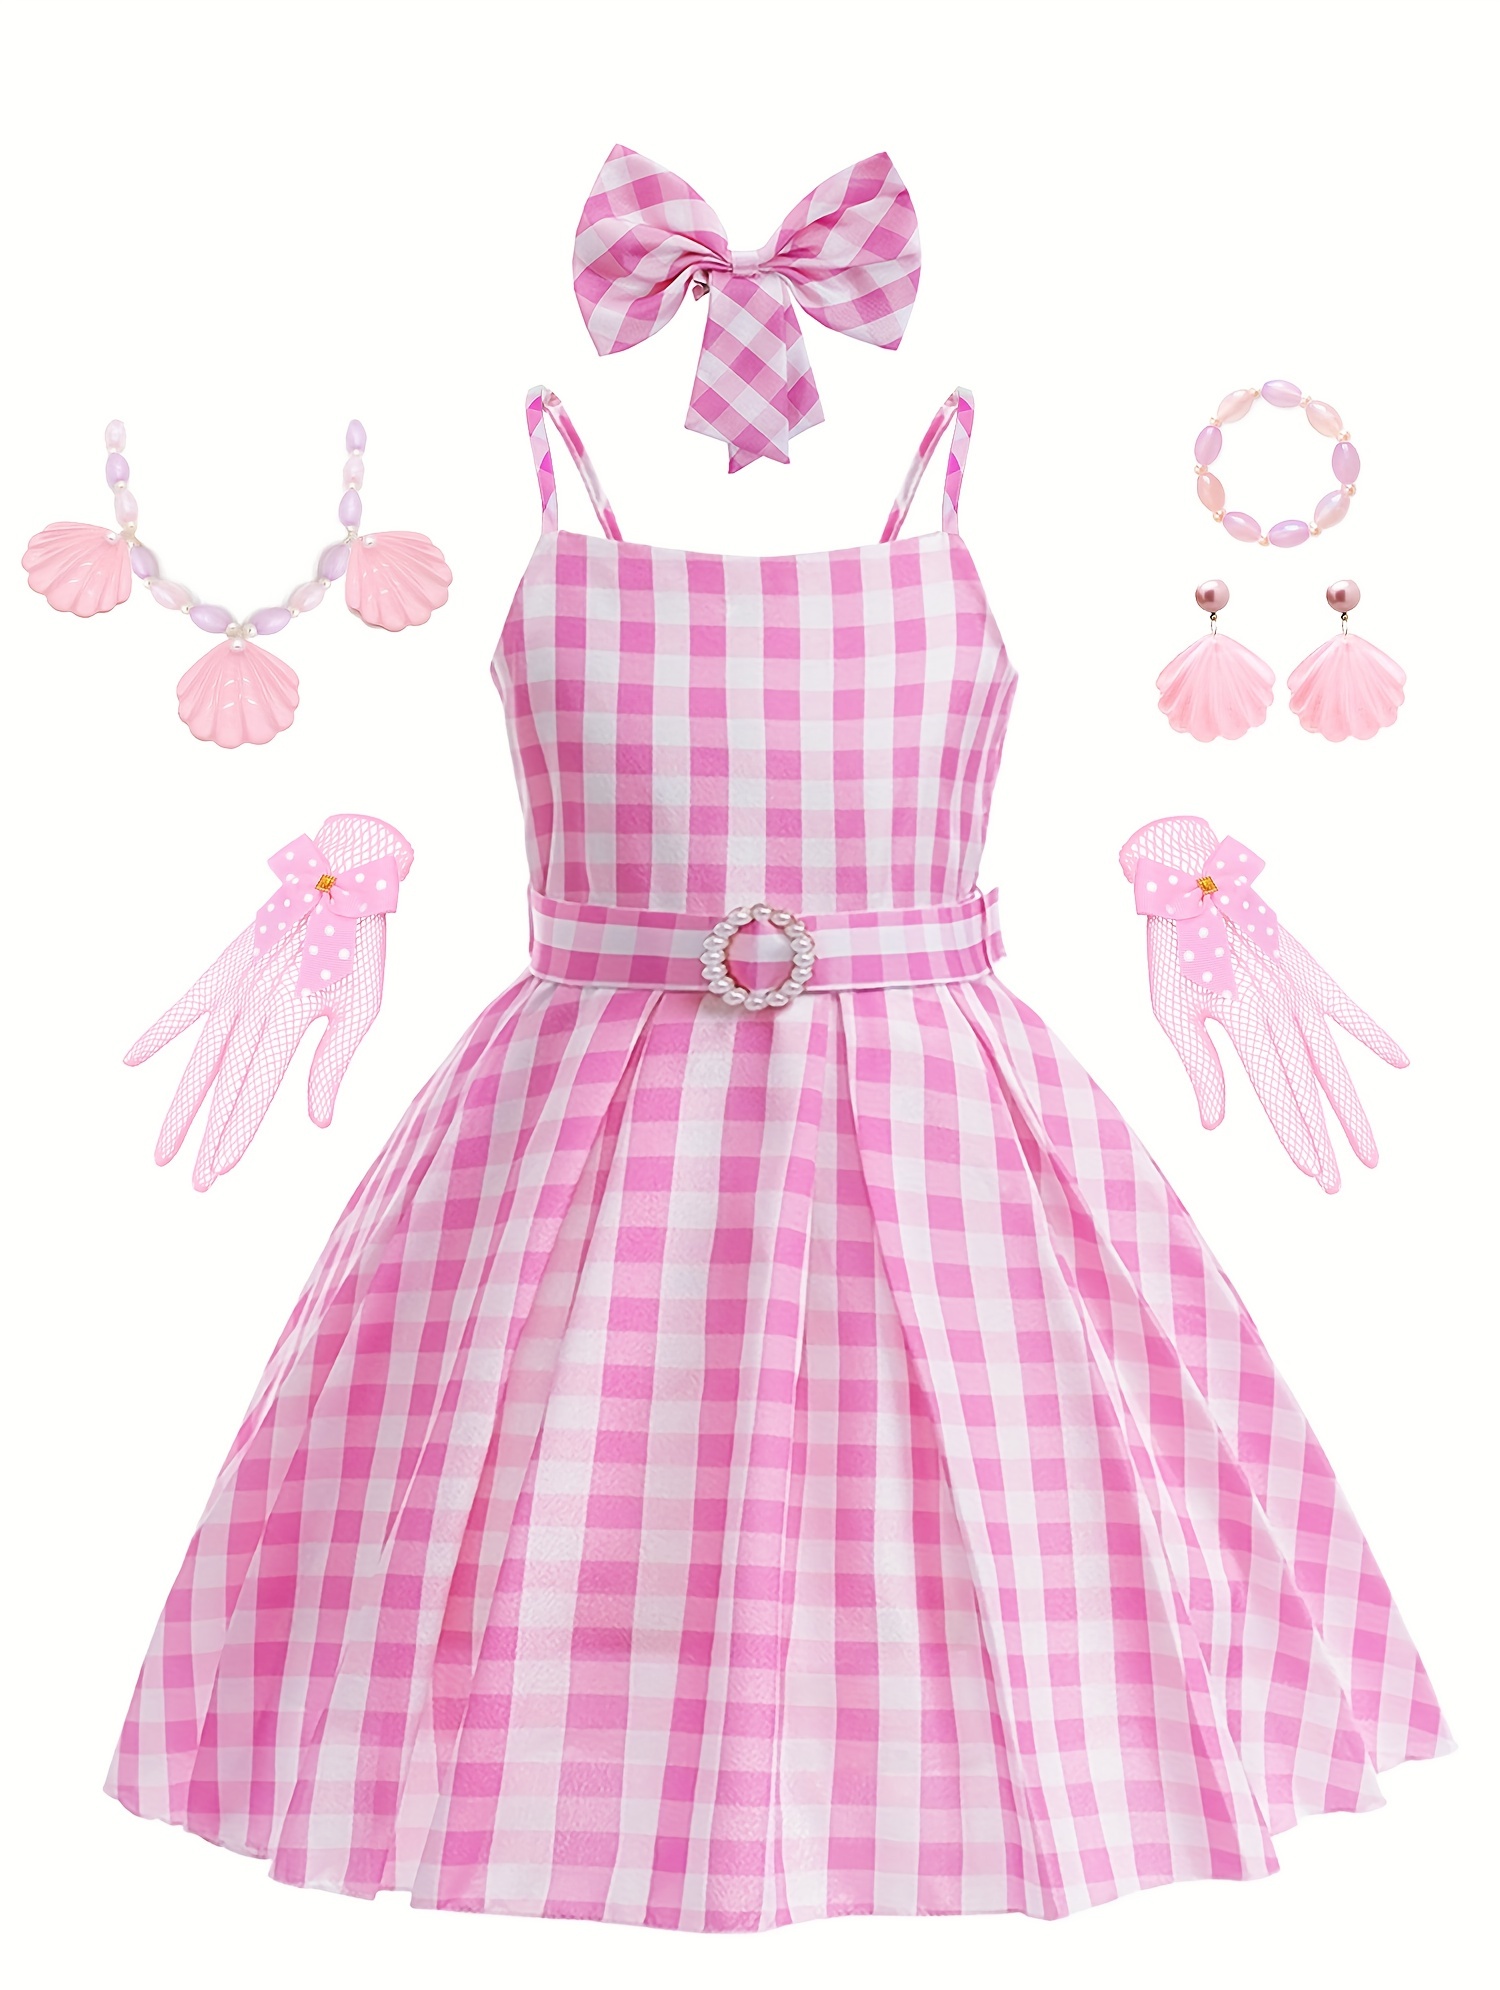 Disney meninas princesa vestido dormir beleza aurora cosplay traje carnaval  festa de aniversário rosa vestidos crianças roupas